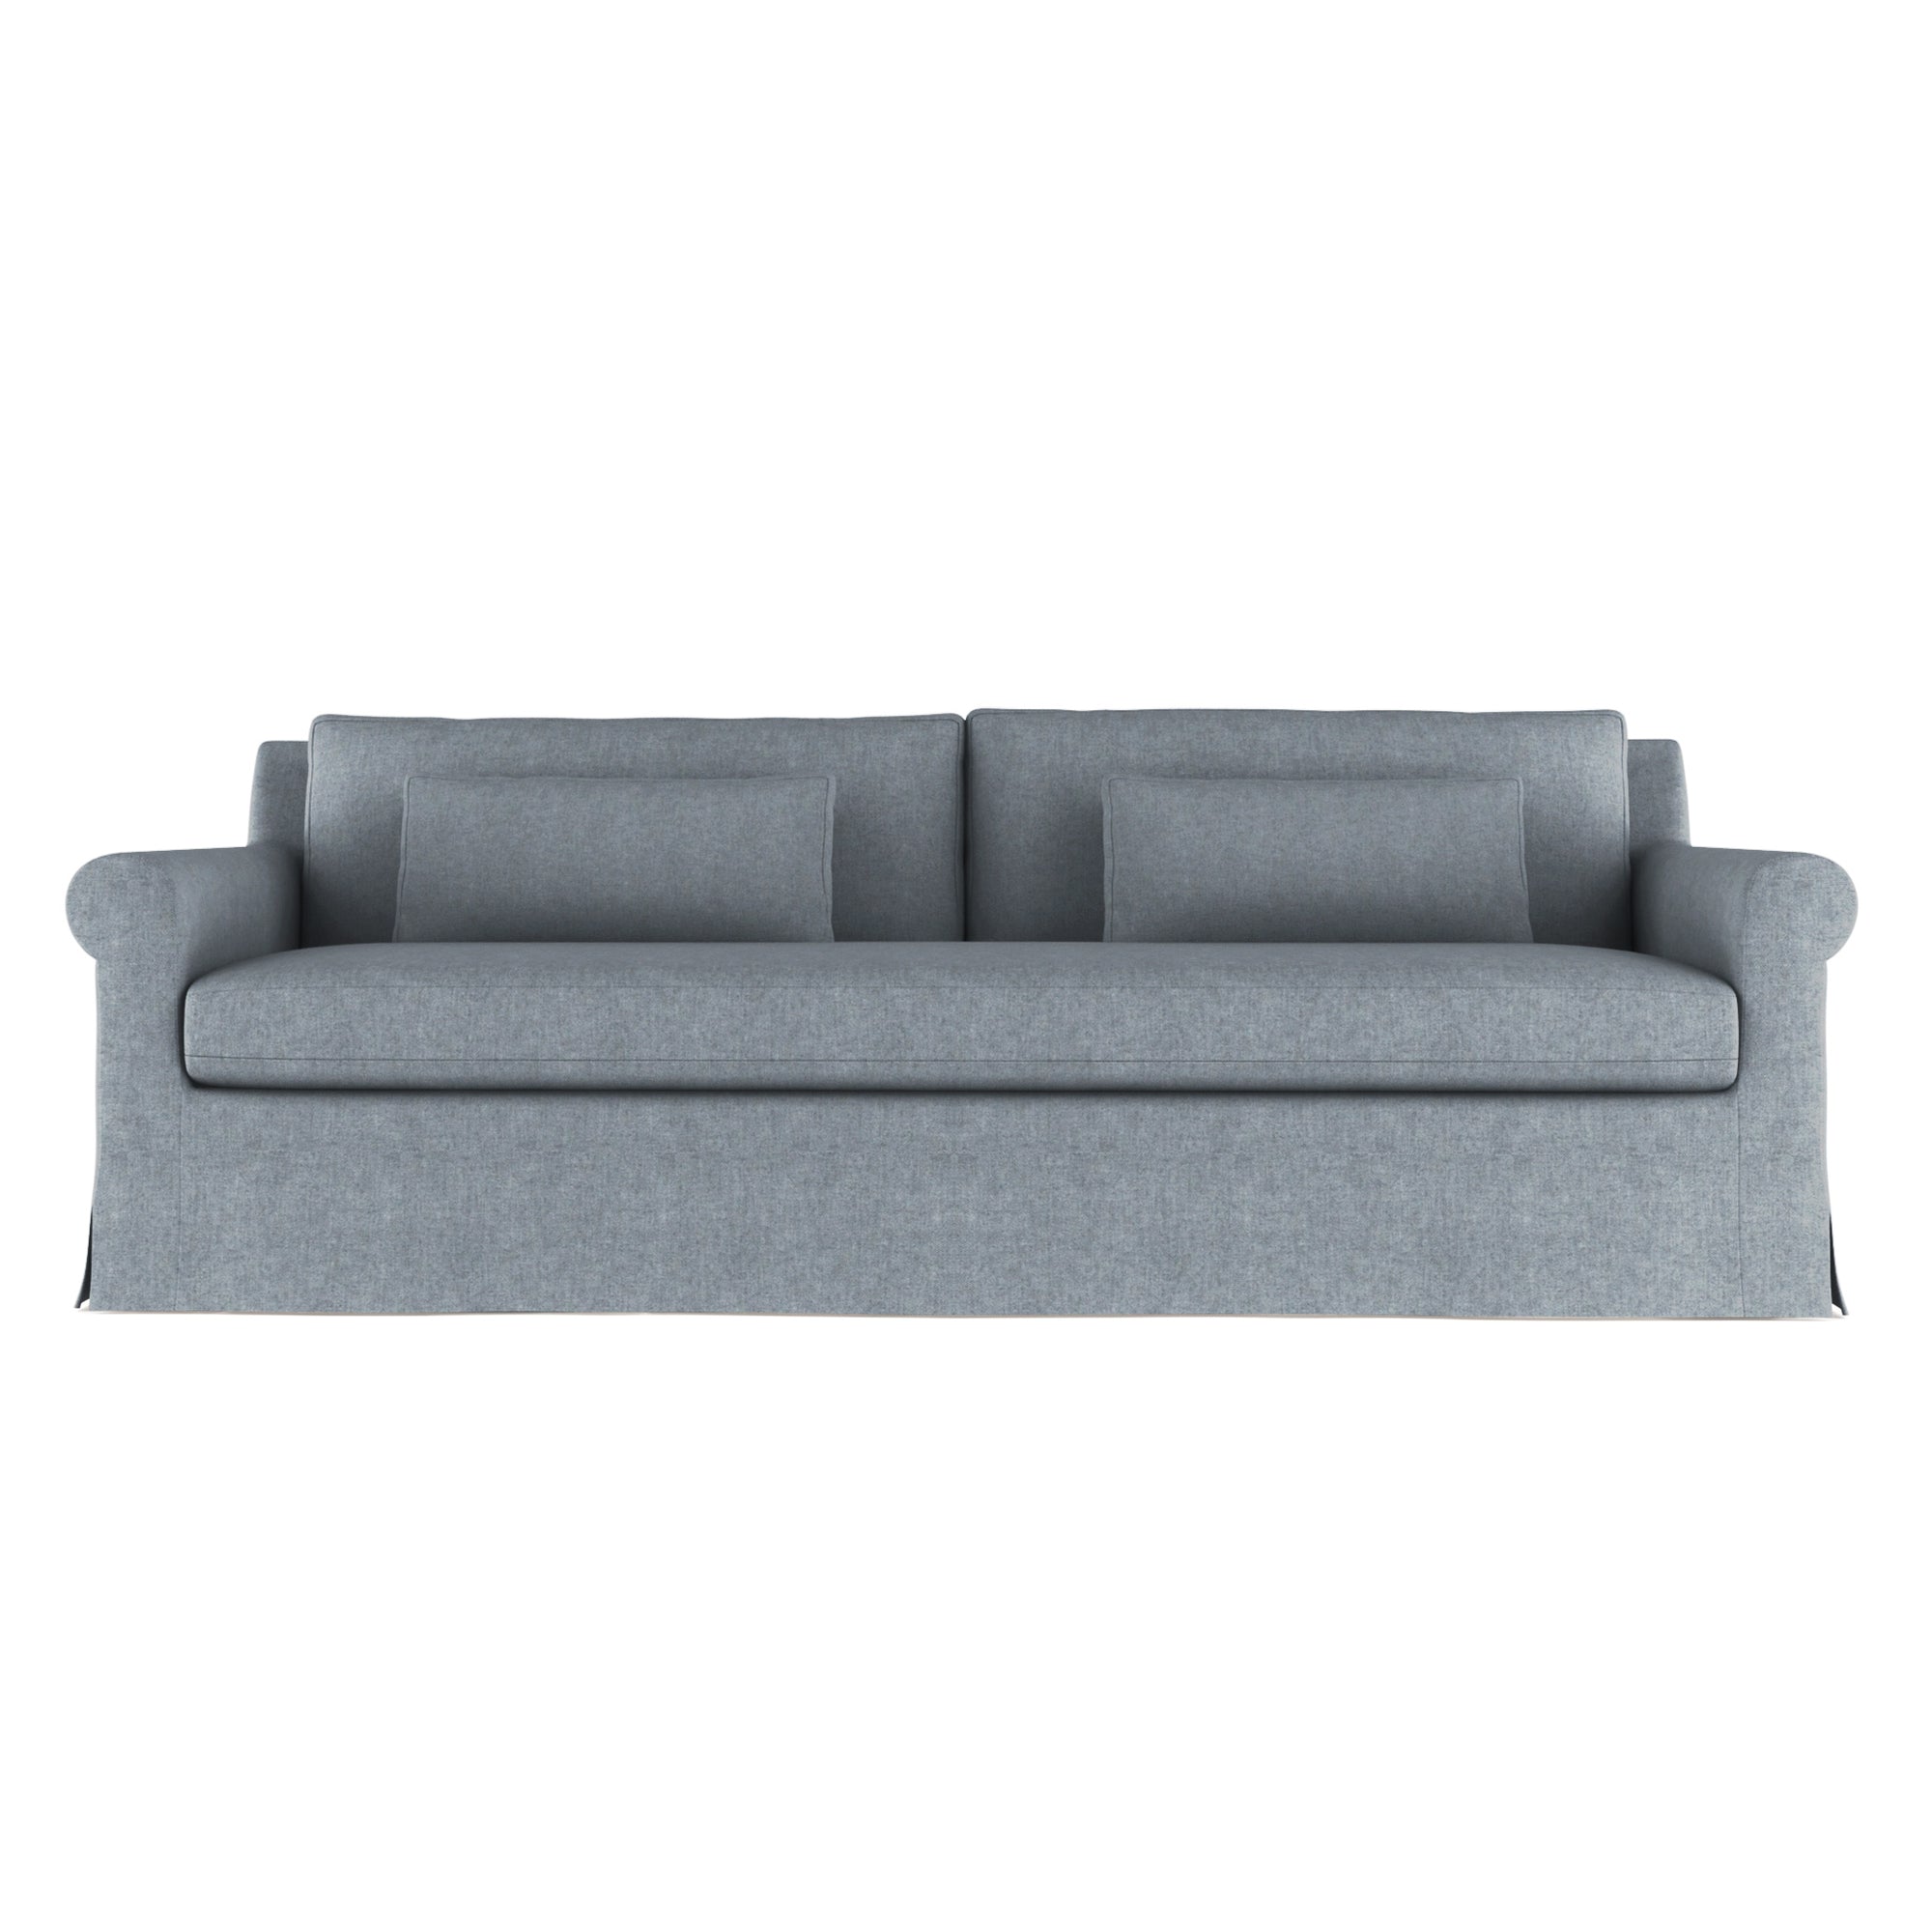 Ludlow Sofa - Haze Plush Velvet